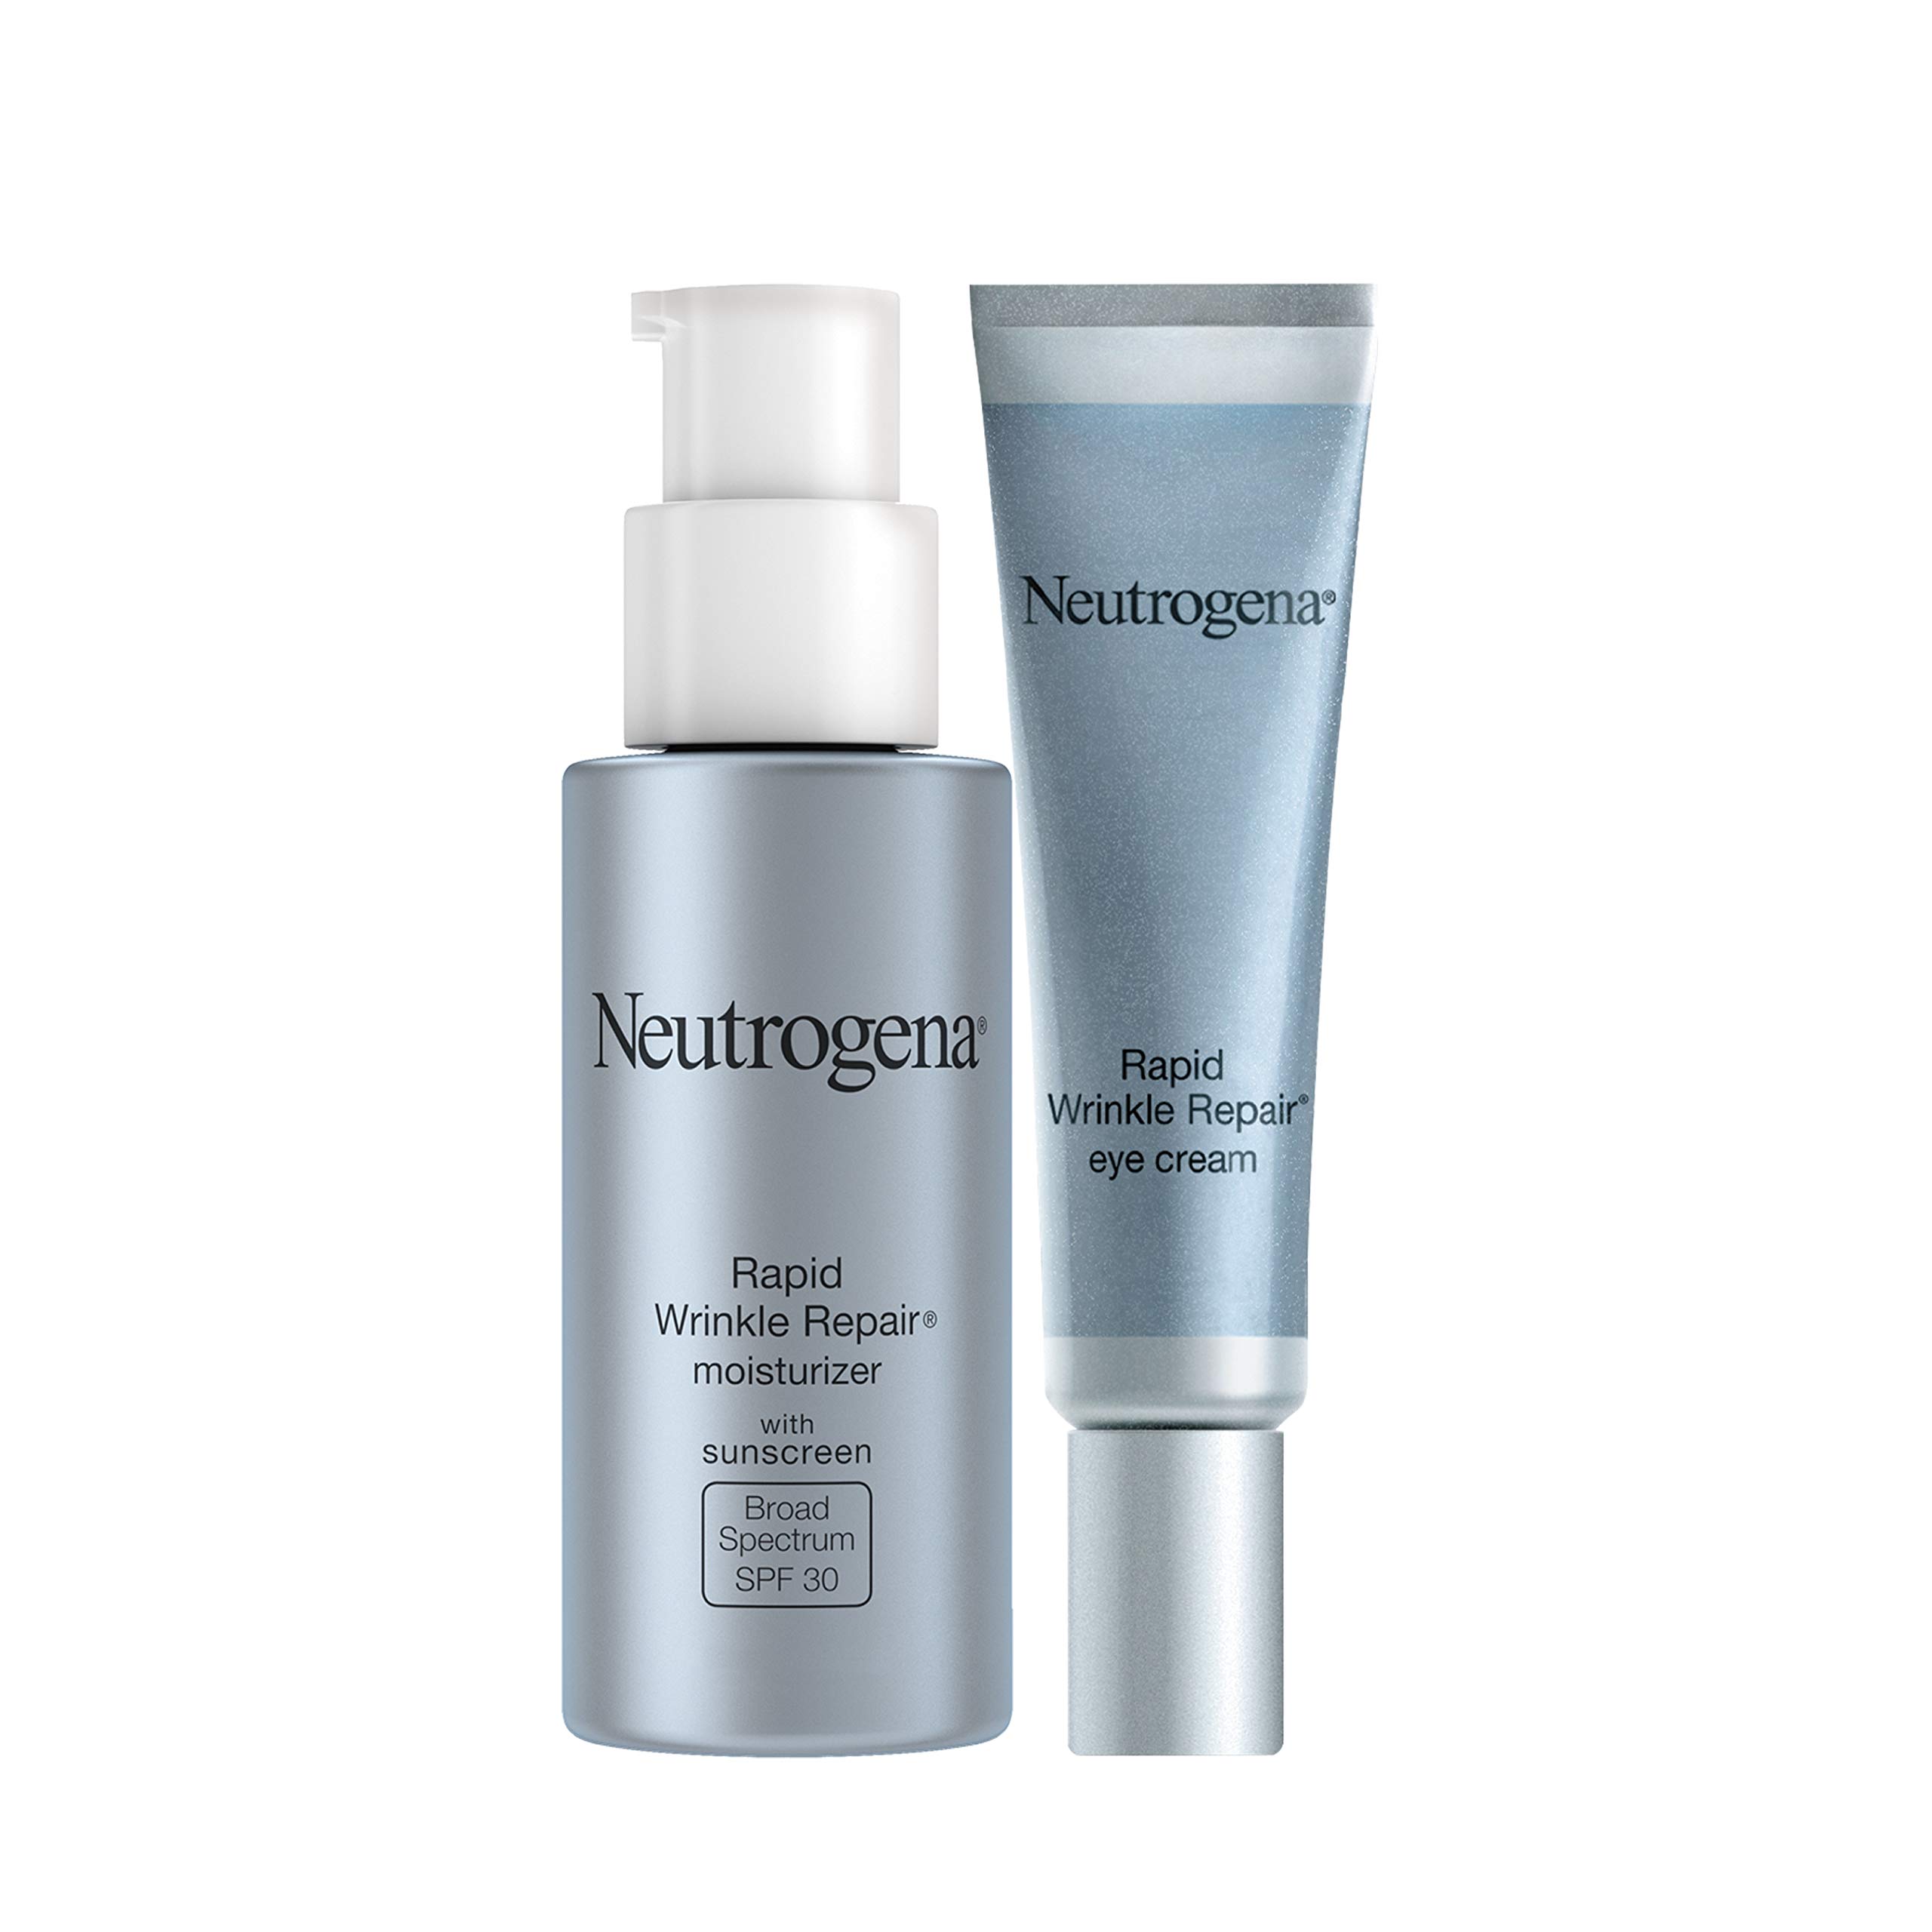 Neutrogena Rapid Wrinkle Repair Retinol Facial Moisturizer with SPF 30 Sunscreen, 1 fl. oz, & Rapid Wrinkle Repair Retinol Under-Eye Cream, 0.5 oz